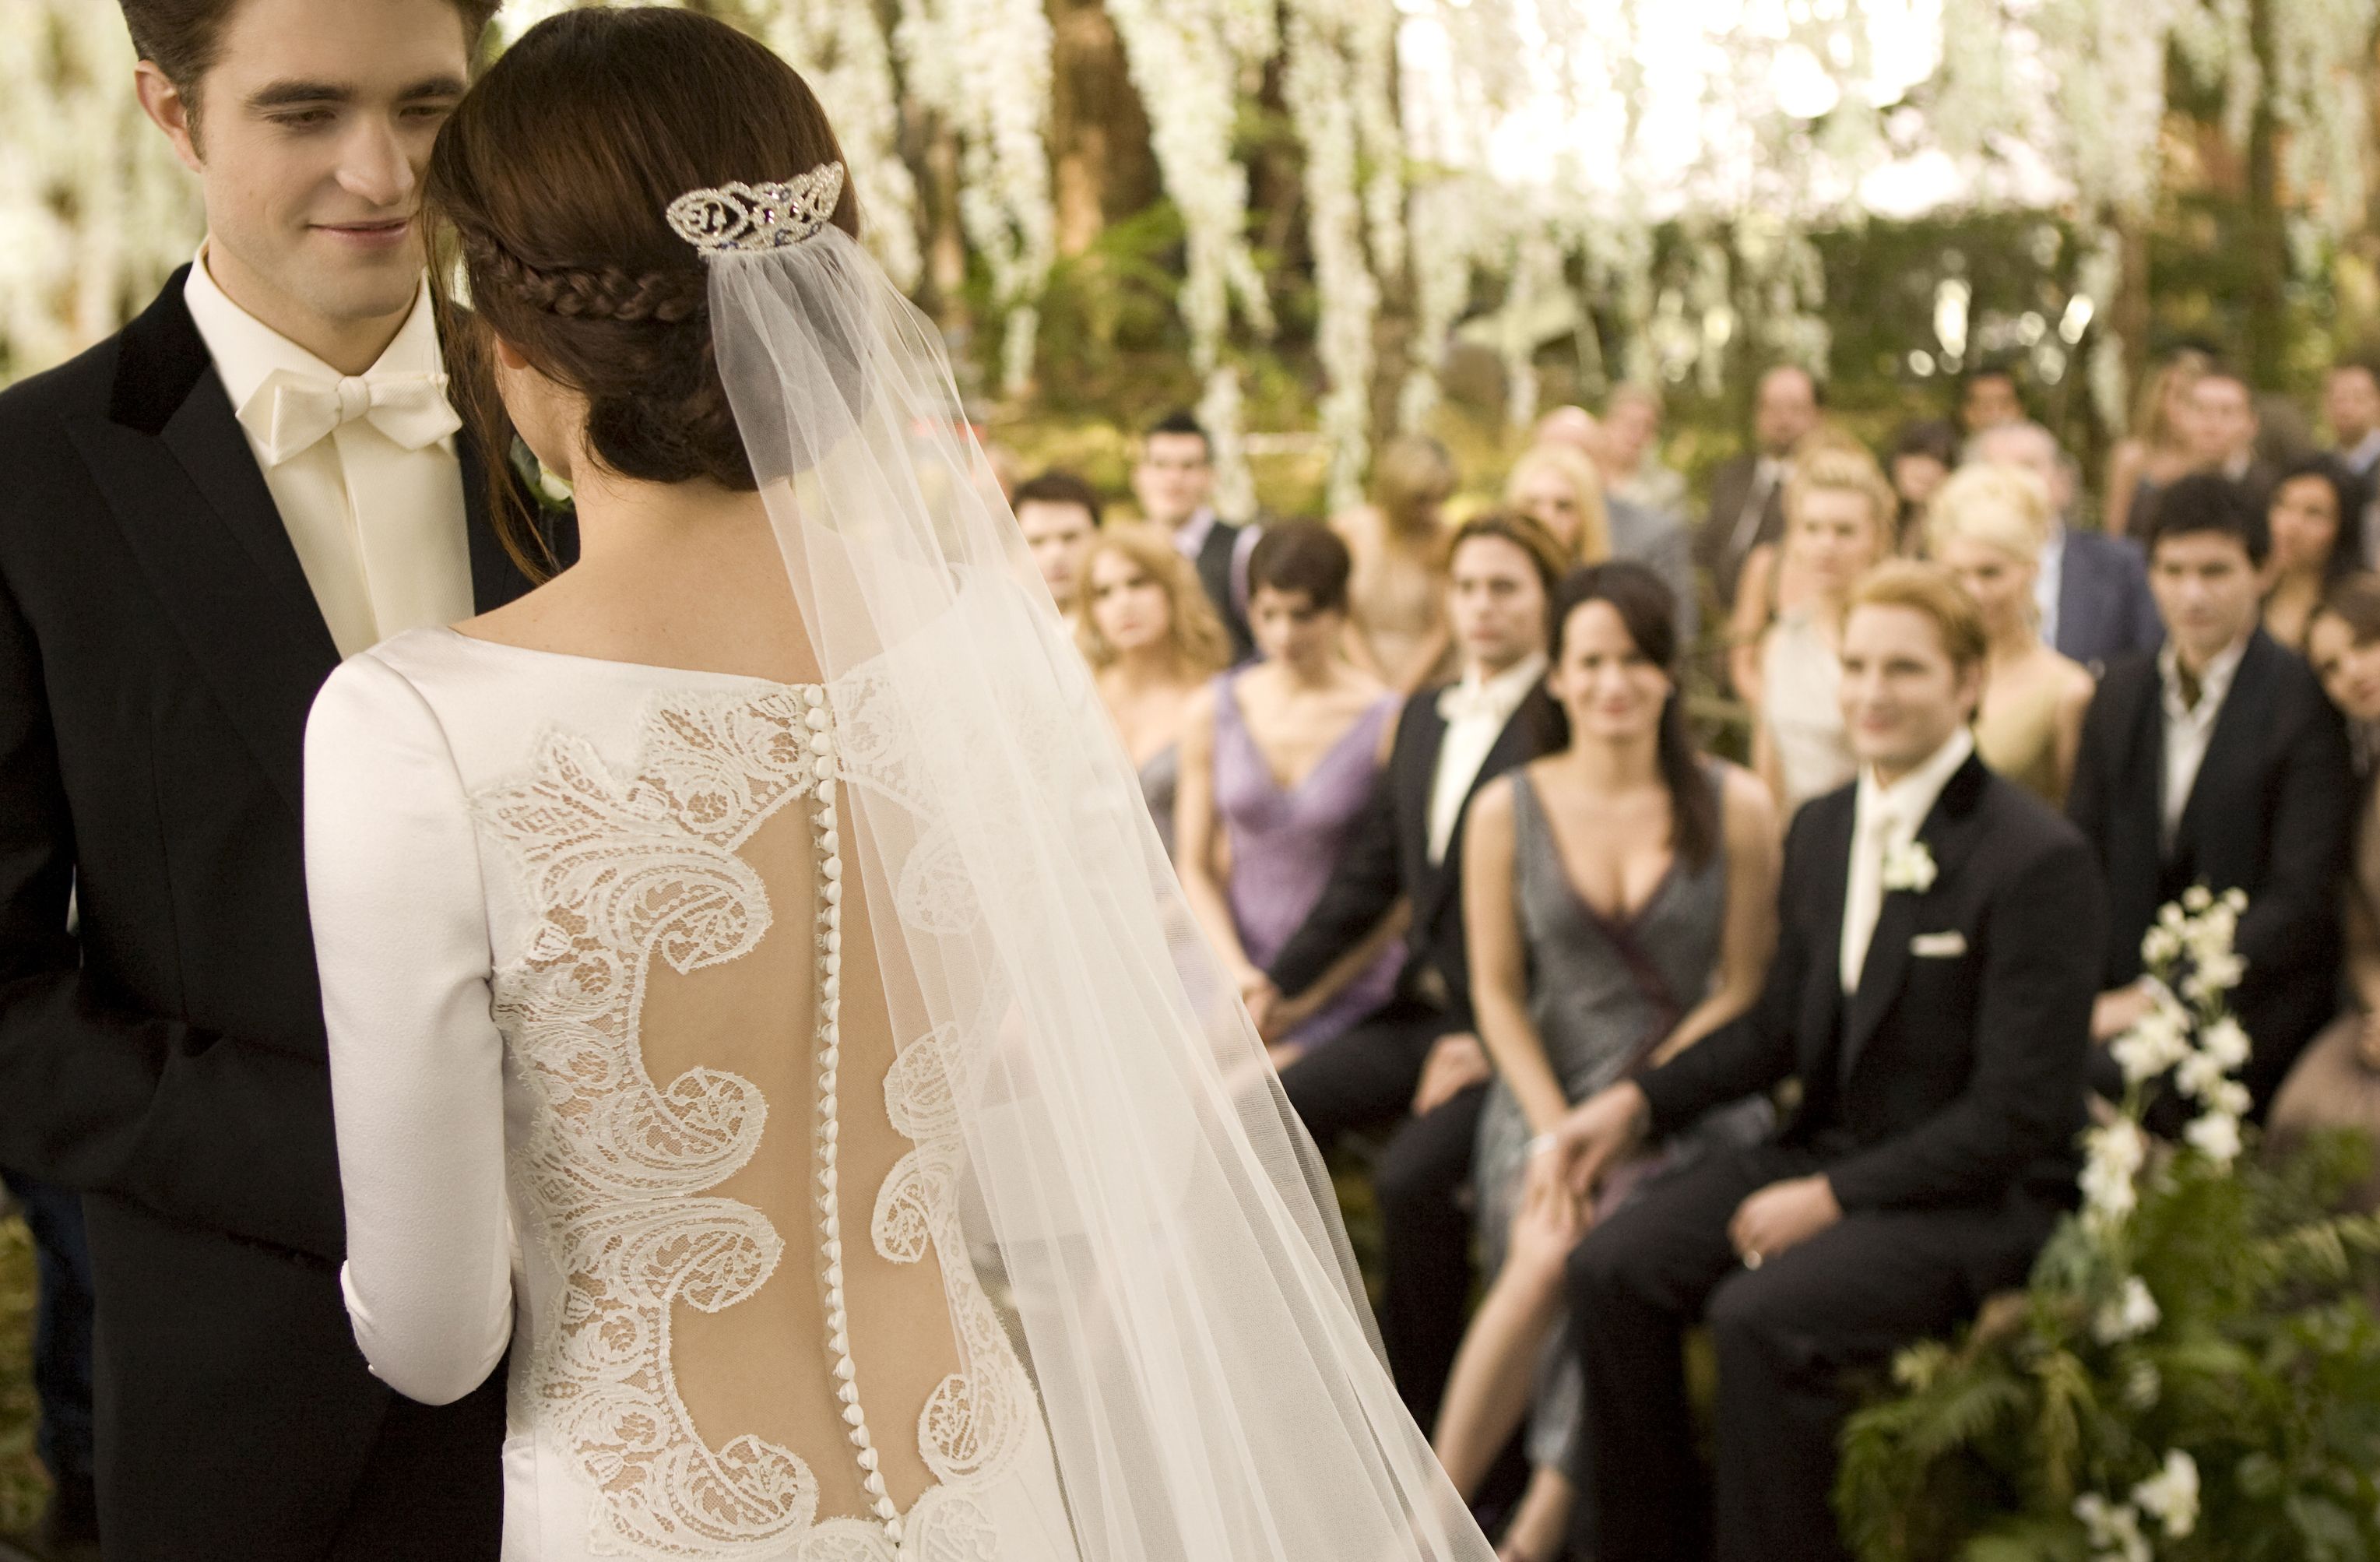 Twilight Breaking Dawn Part 1 Wedding Dress Image & Facts